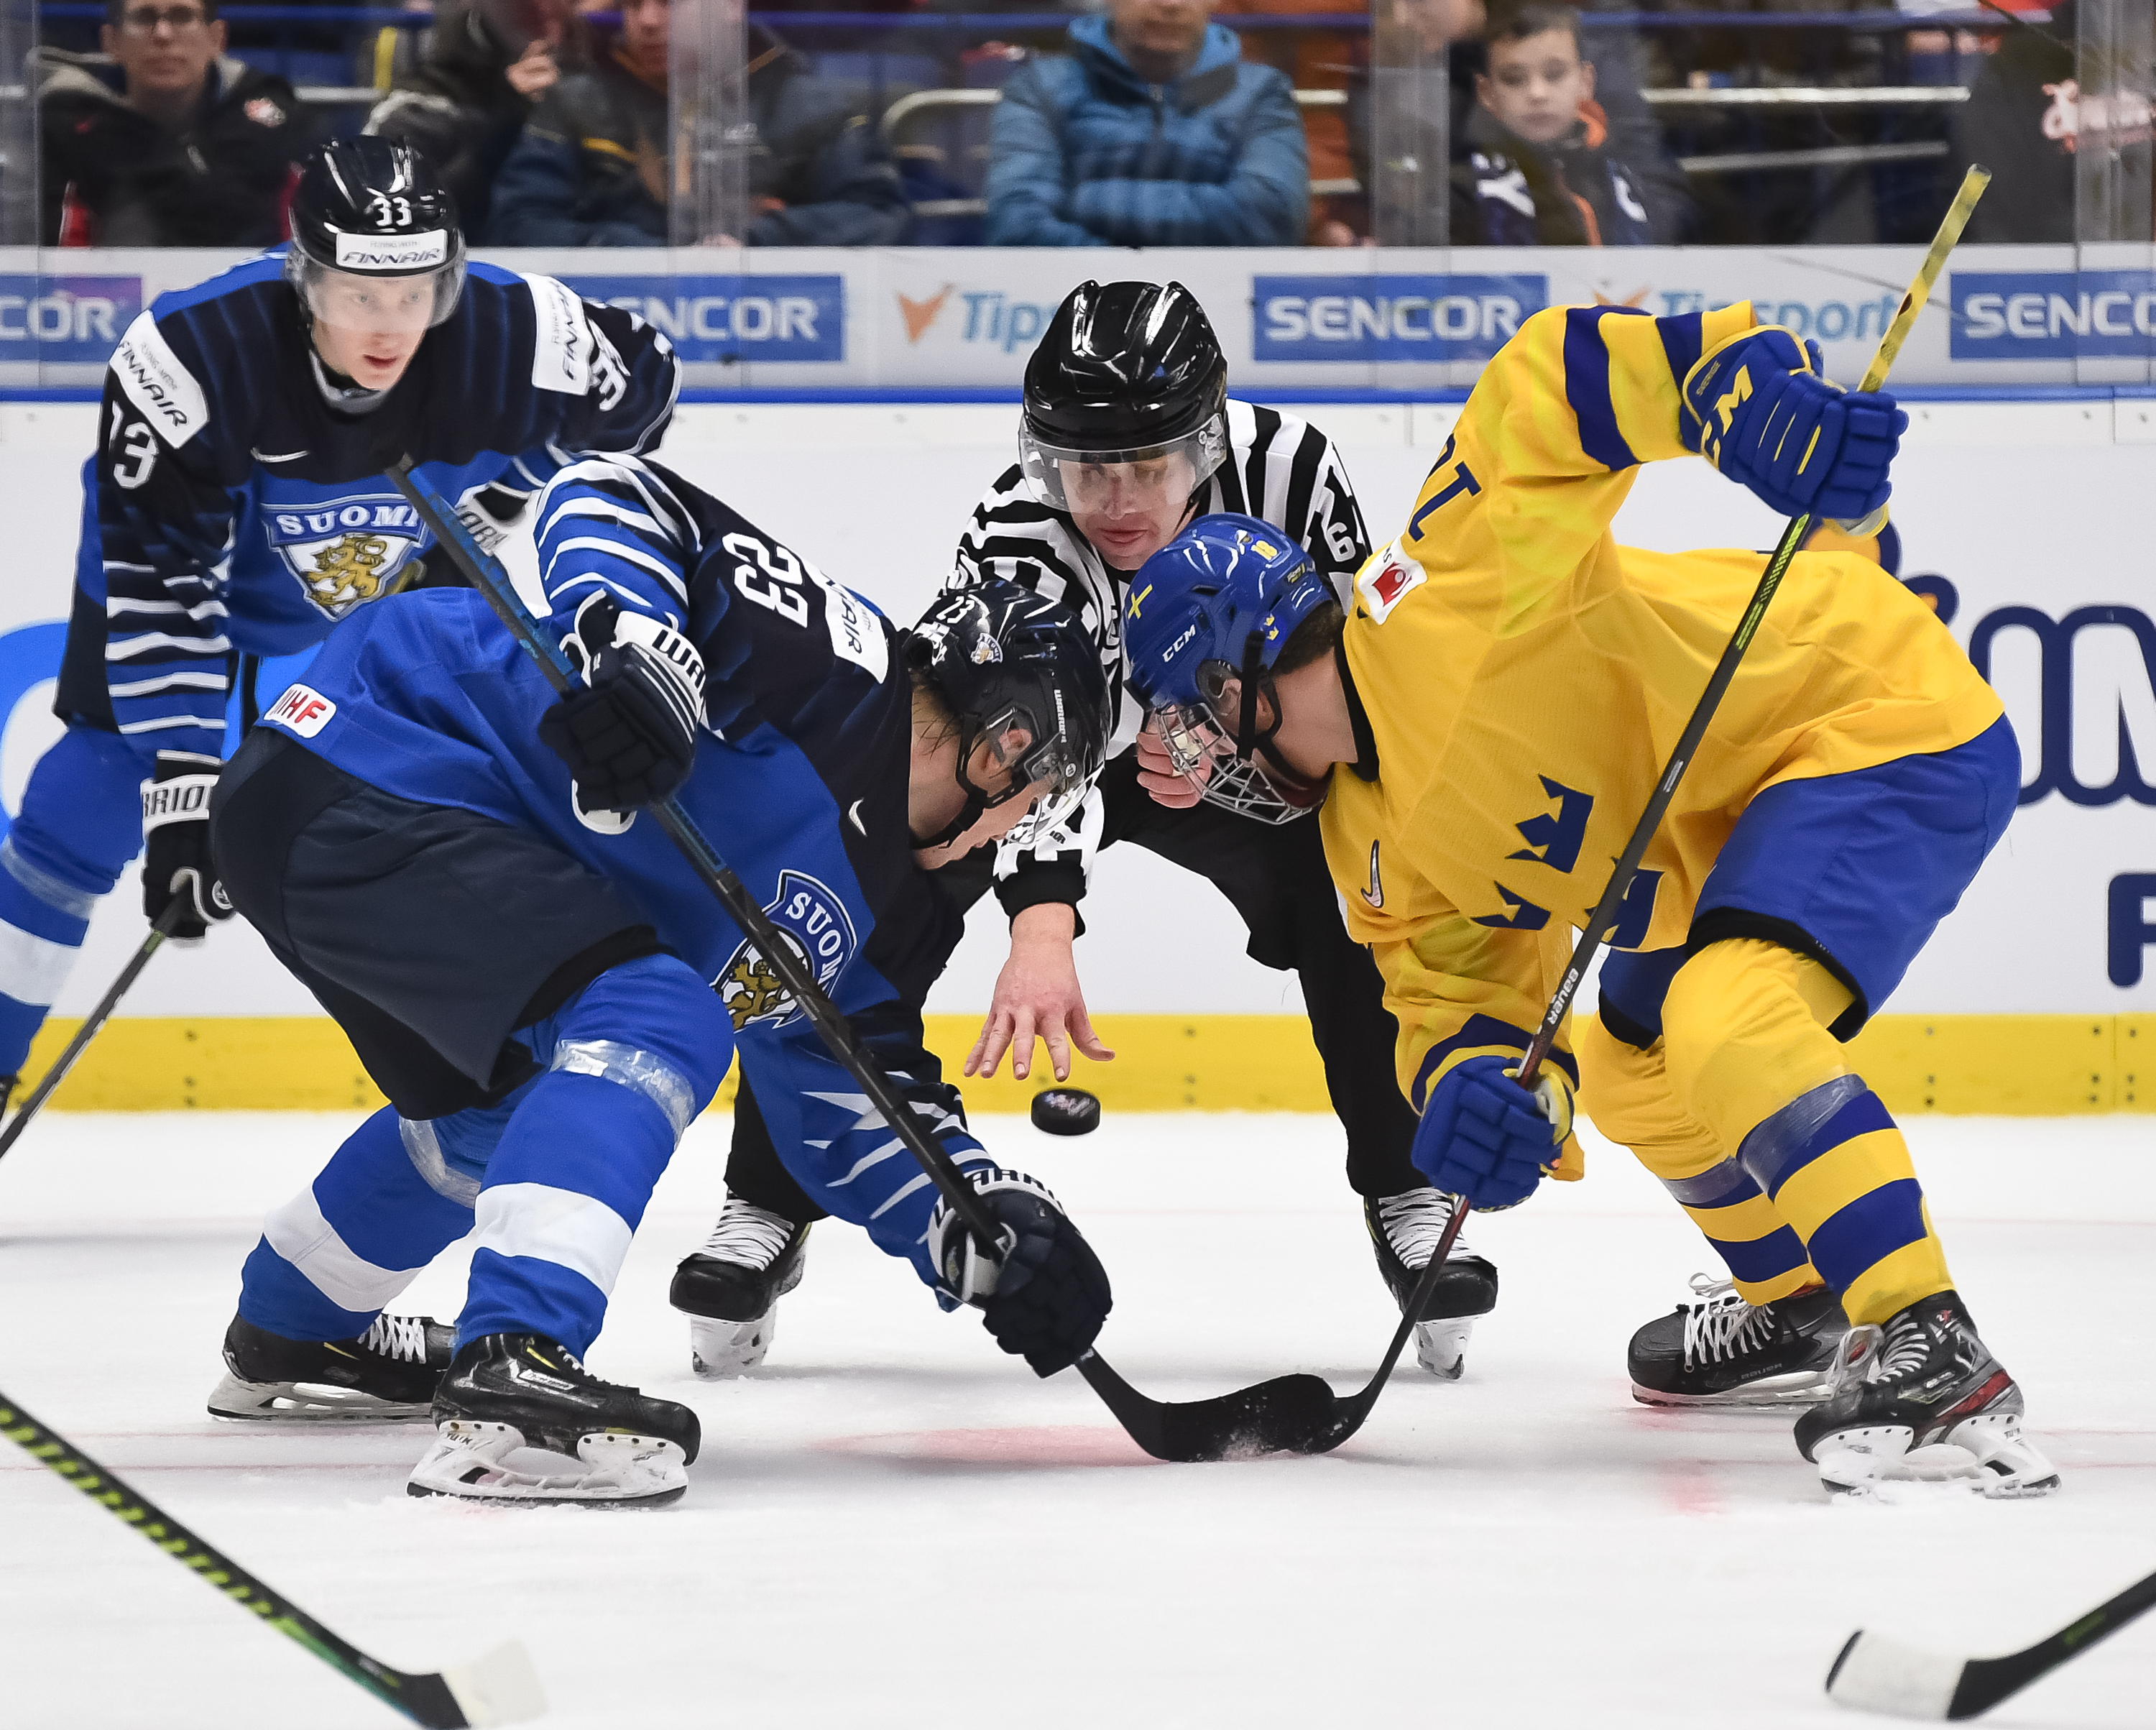 IIHF Quarterfinals set for 2 January